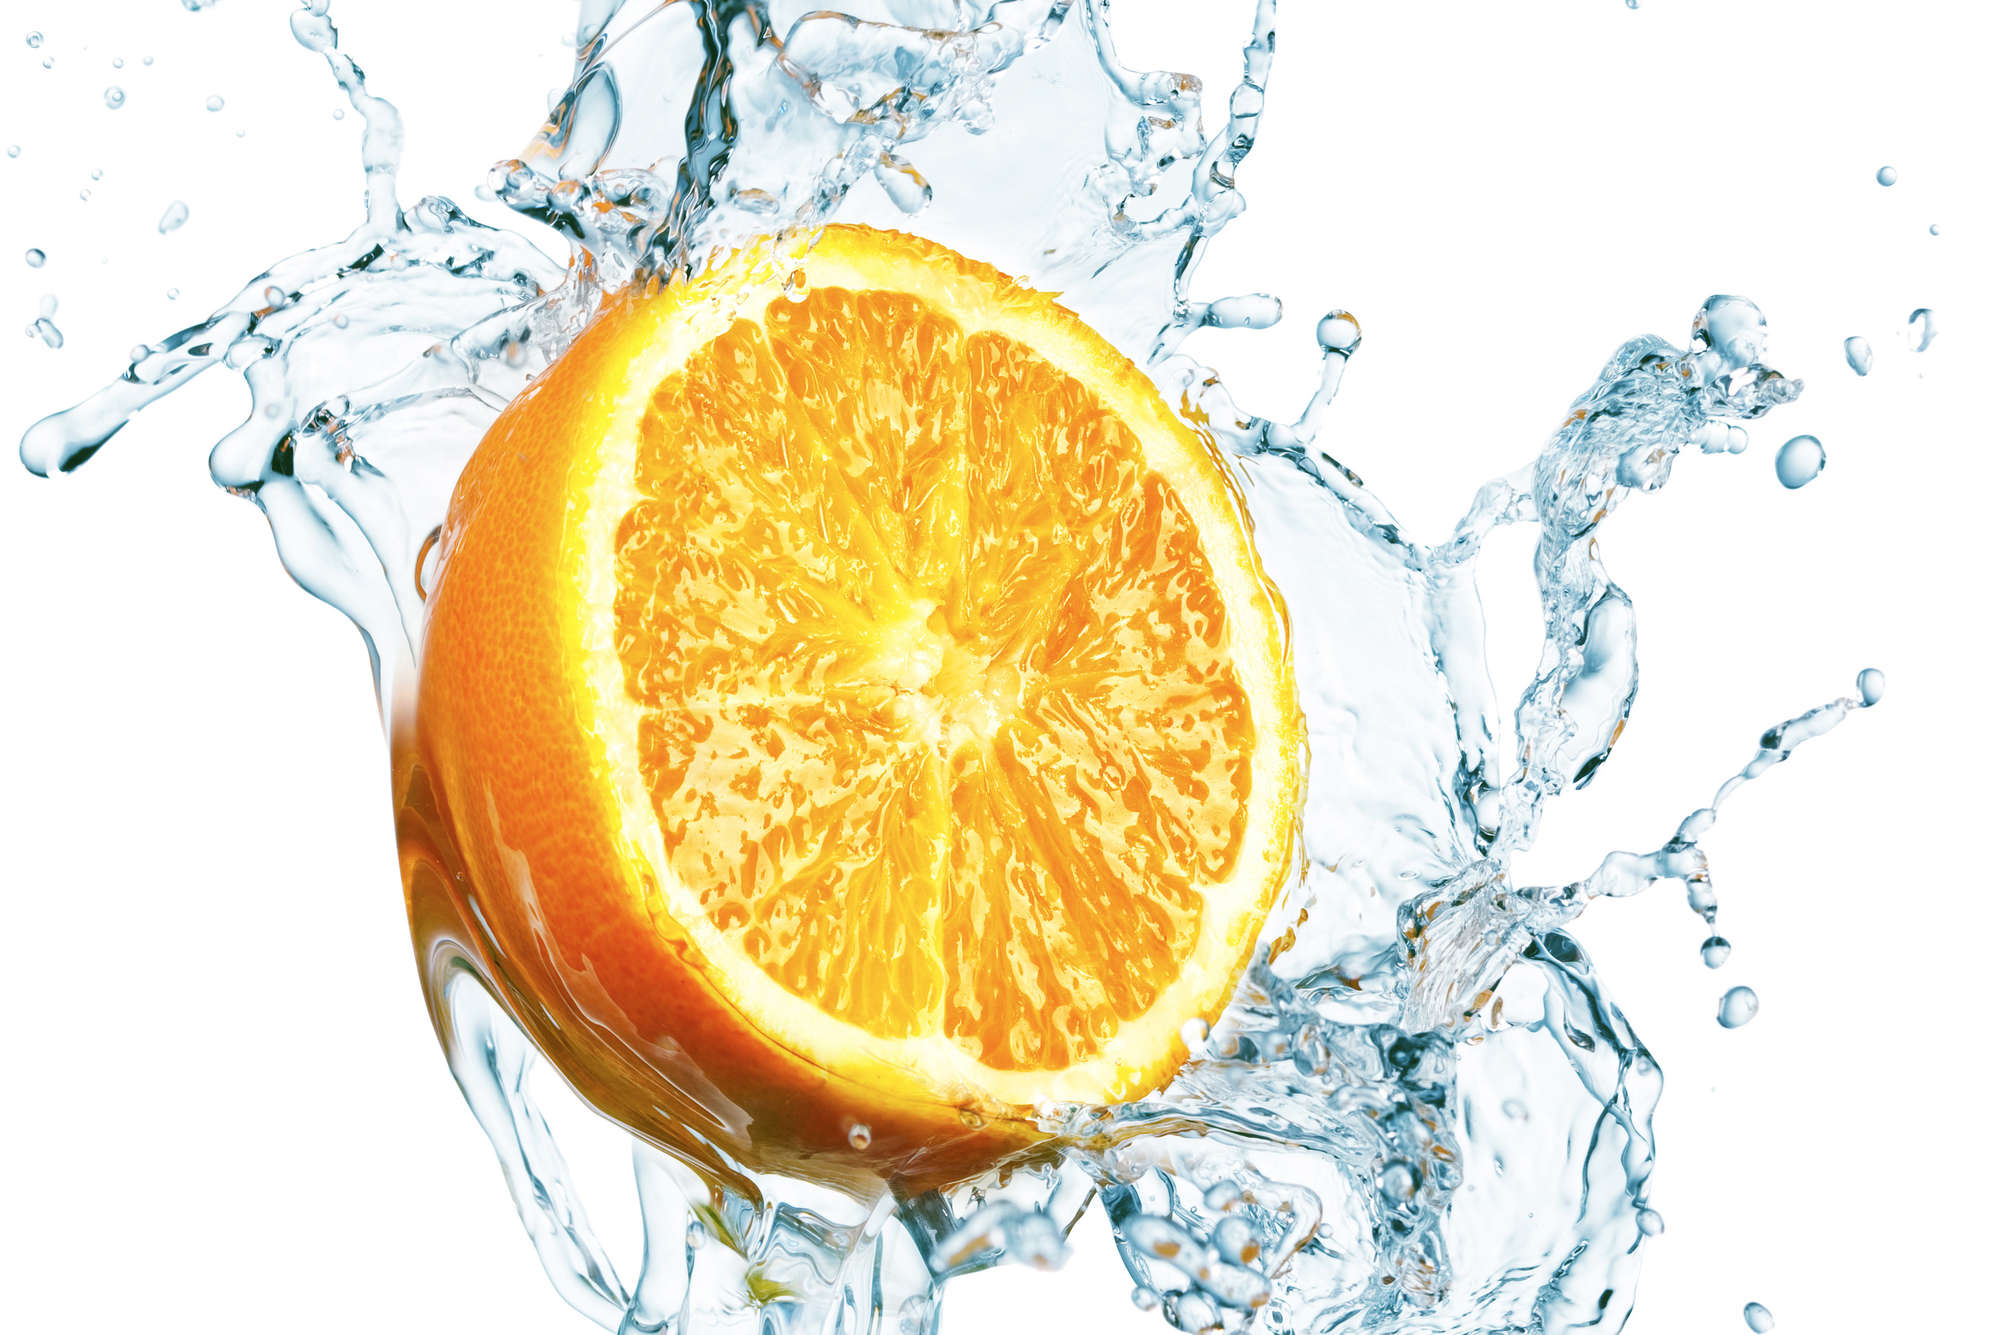             Fototapete Orange im Wasser – Perlmutt Glattvlies
        